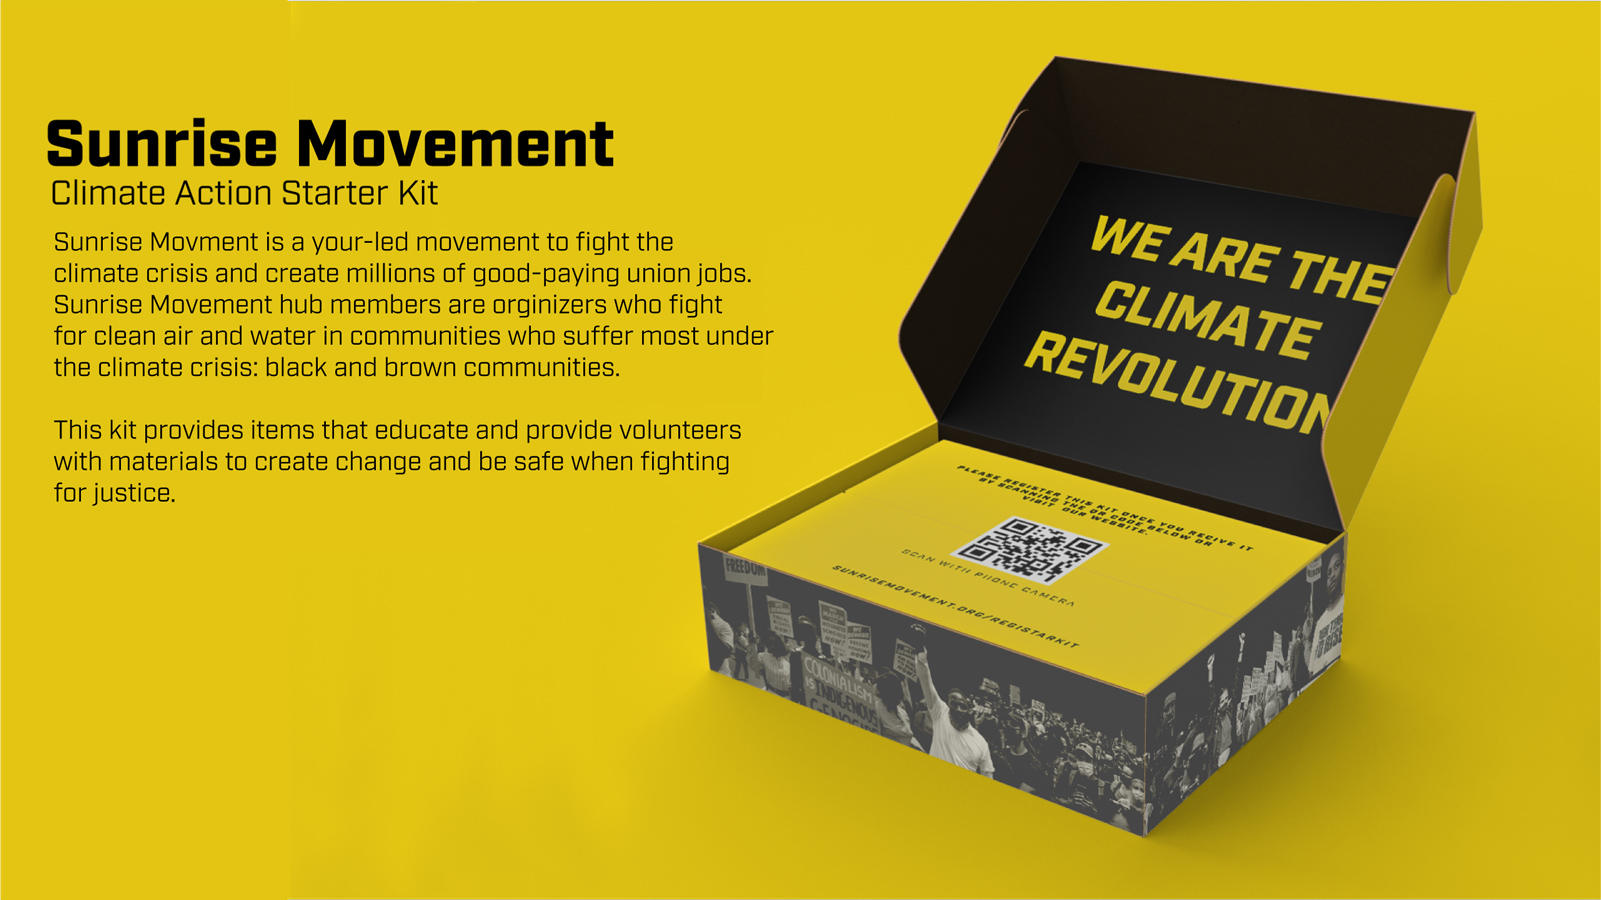 Sunrise movement: Climate Action Starter Kit